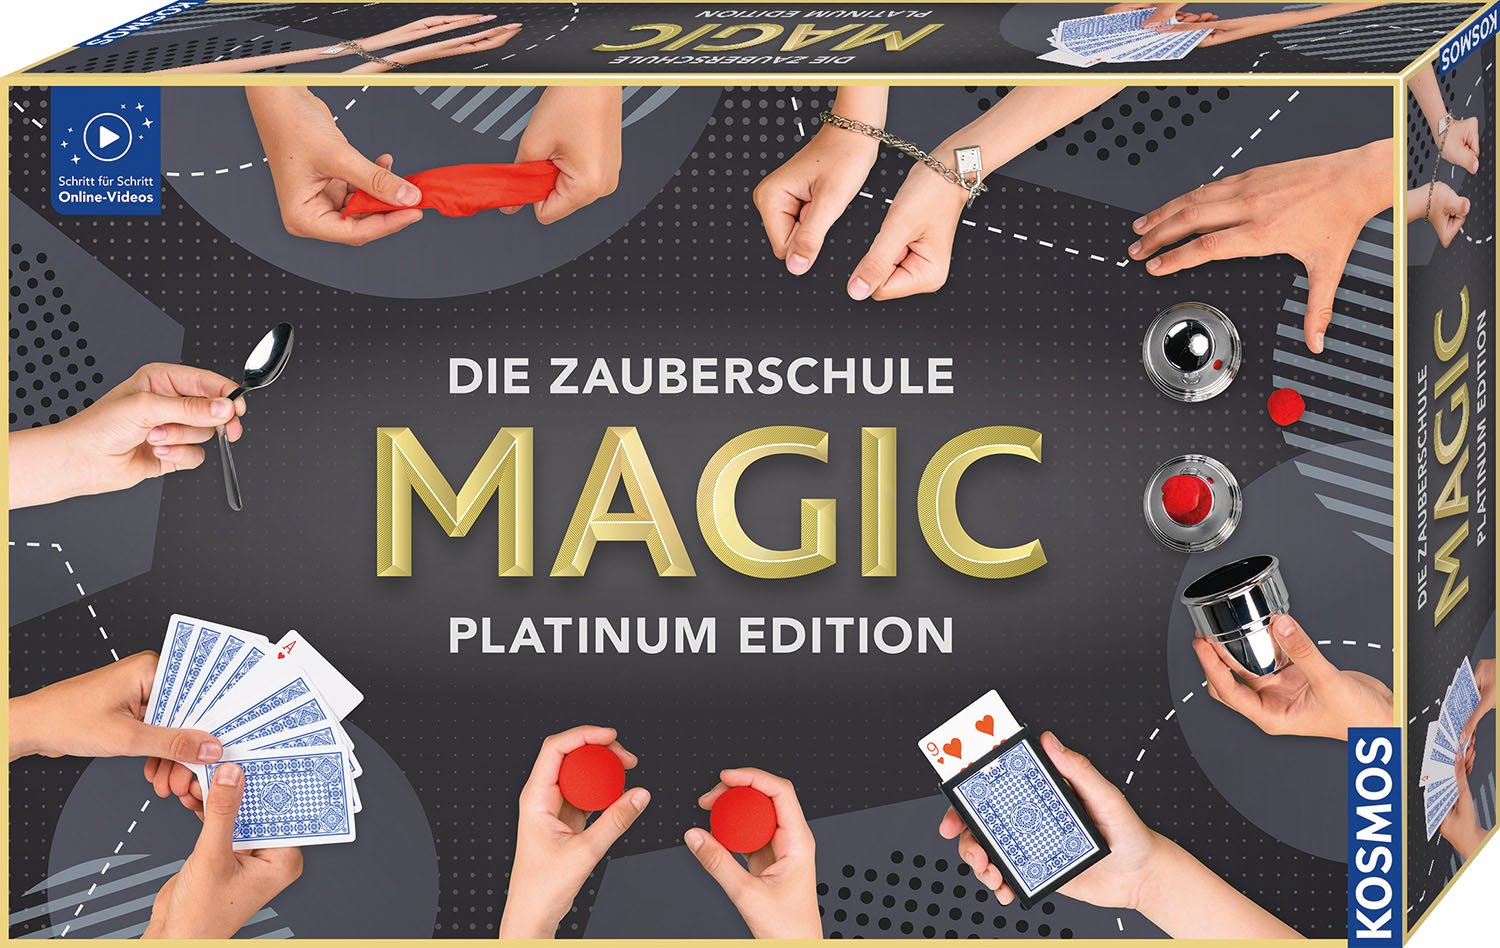 Die Zauberschule MAGIC Platinum Edition